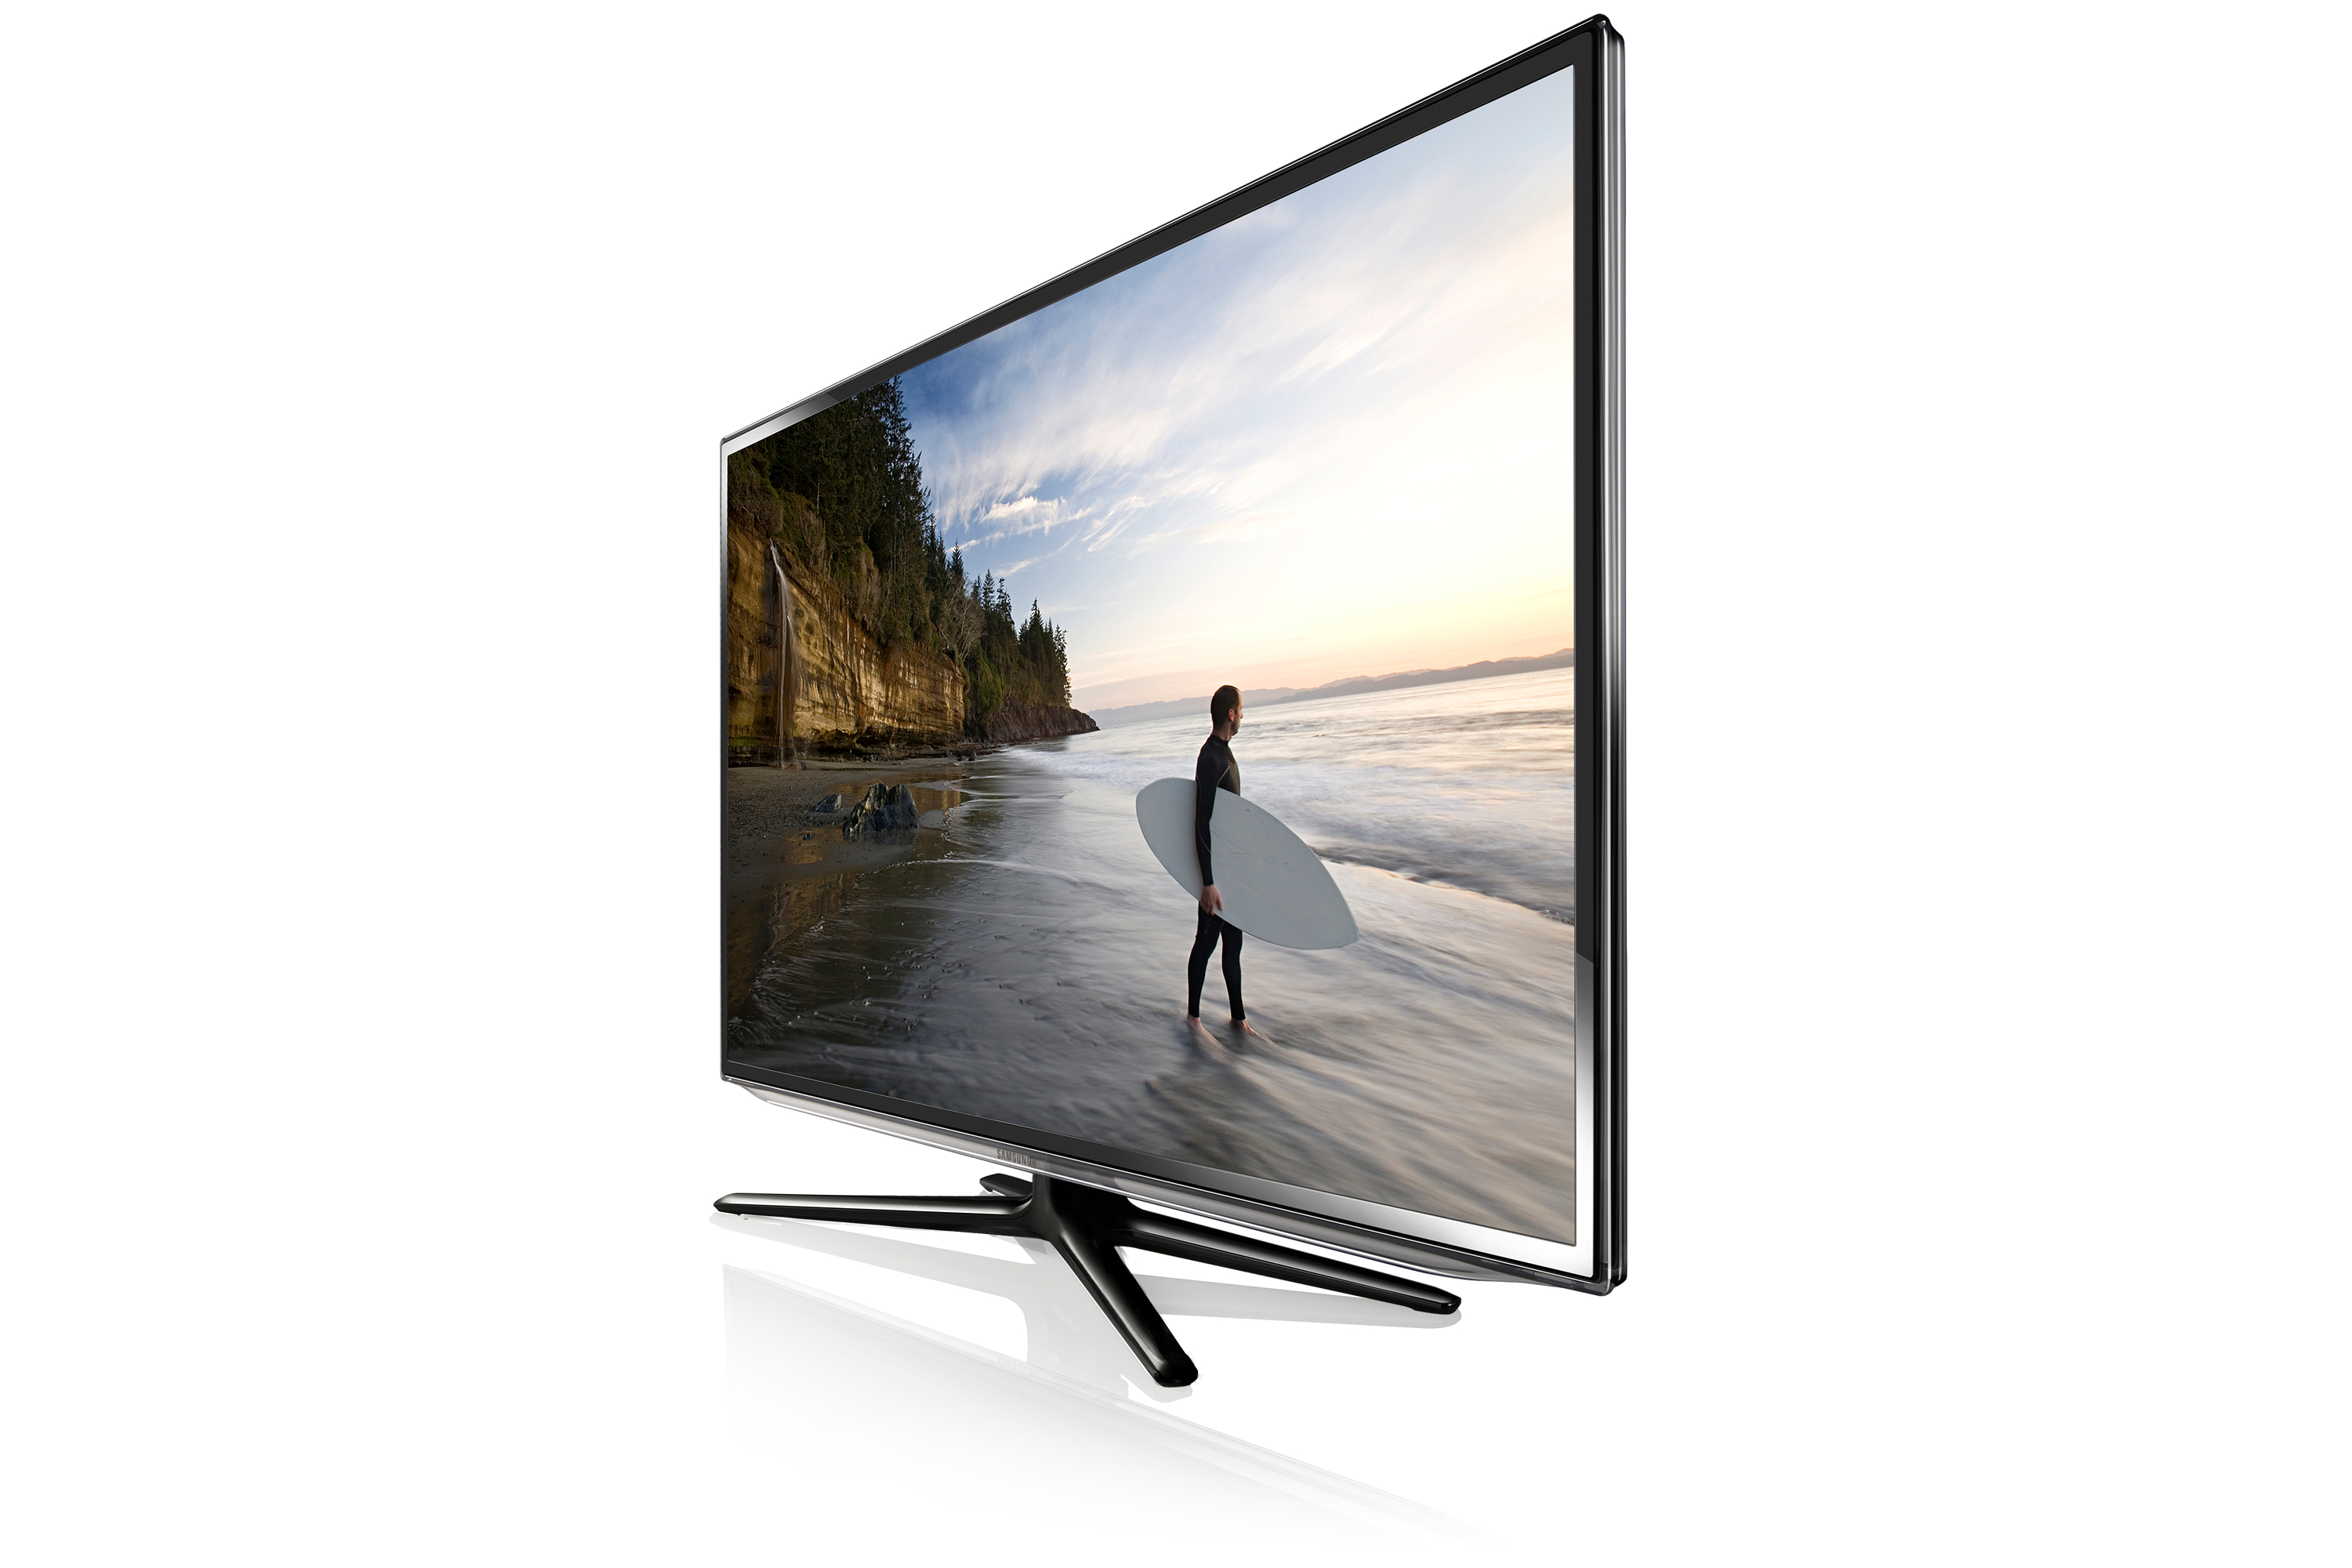 Led телевизоры samsung отзывы. Samsung ue32es6100. Samsung ue40es6100 led. Самсунг led 40 смарт ТВ. Samsung led 32 Smart TV.